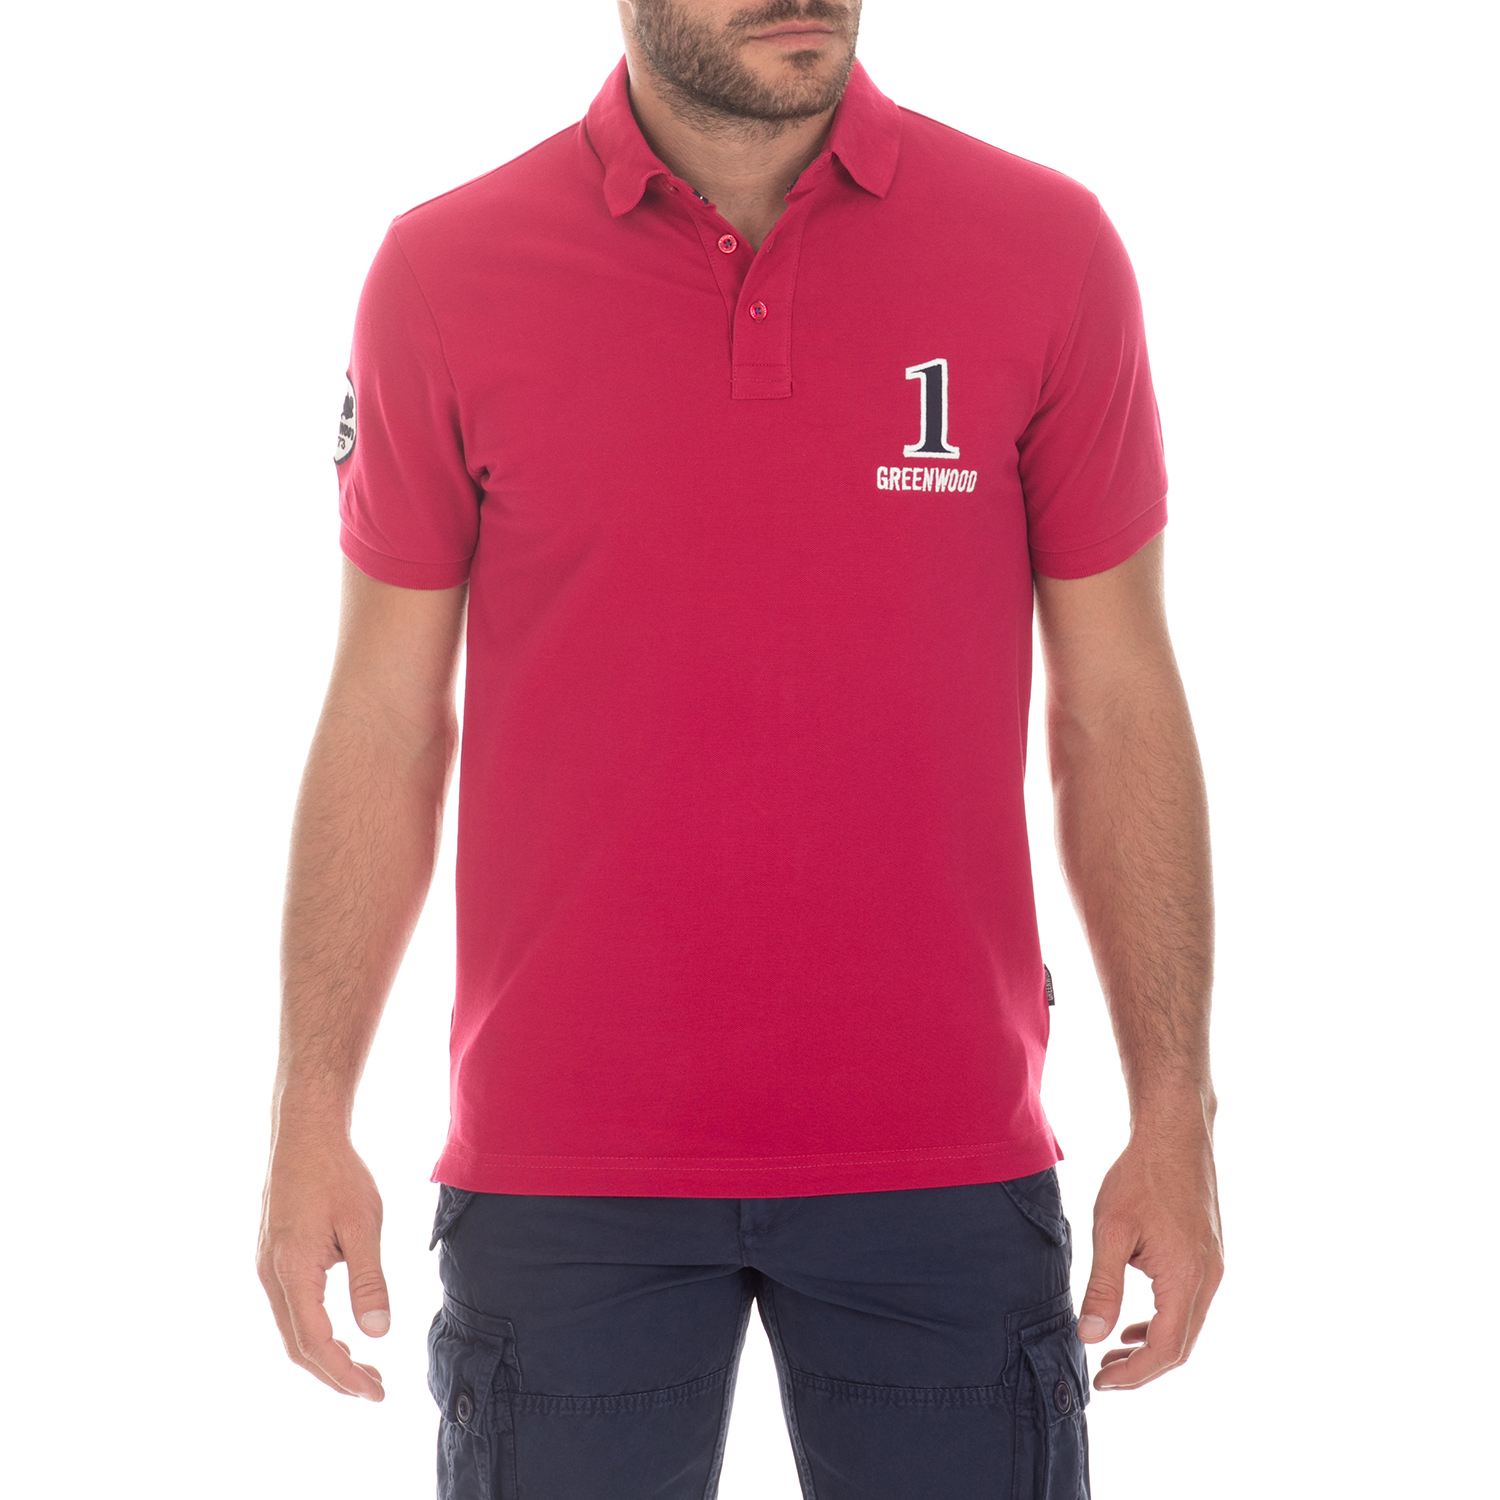 GREENWOOD - Ανδρική μπλούζα GREENWOOD κόκκινη Ανδρικά/Ρούχα/Μπλούζες/Πόλο